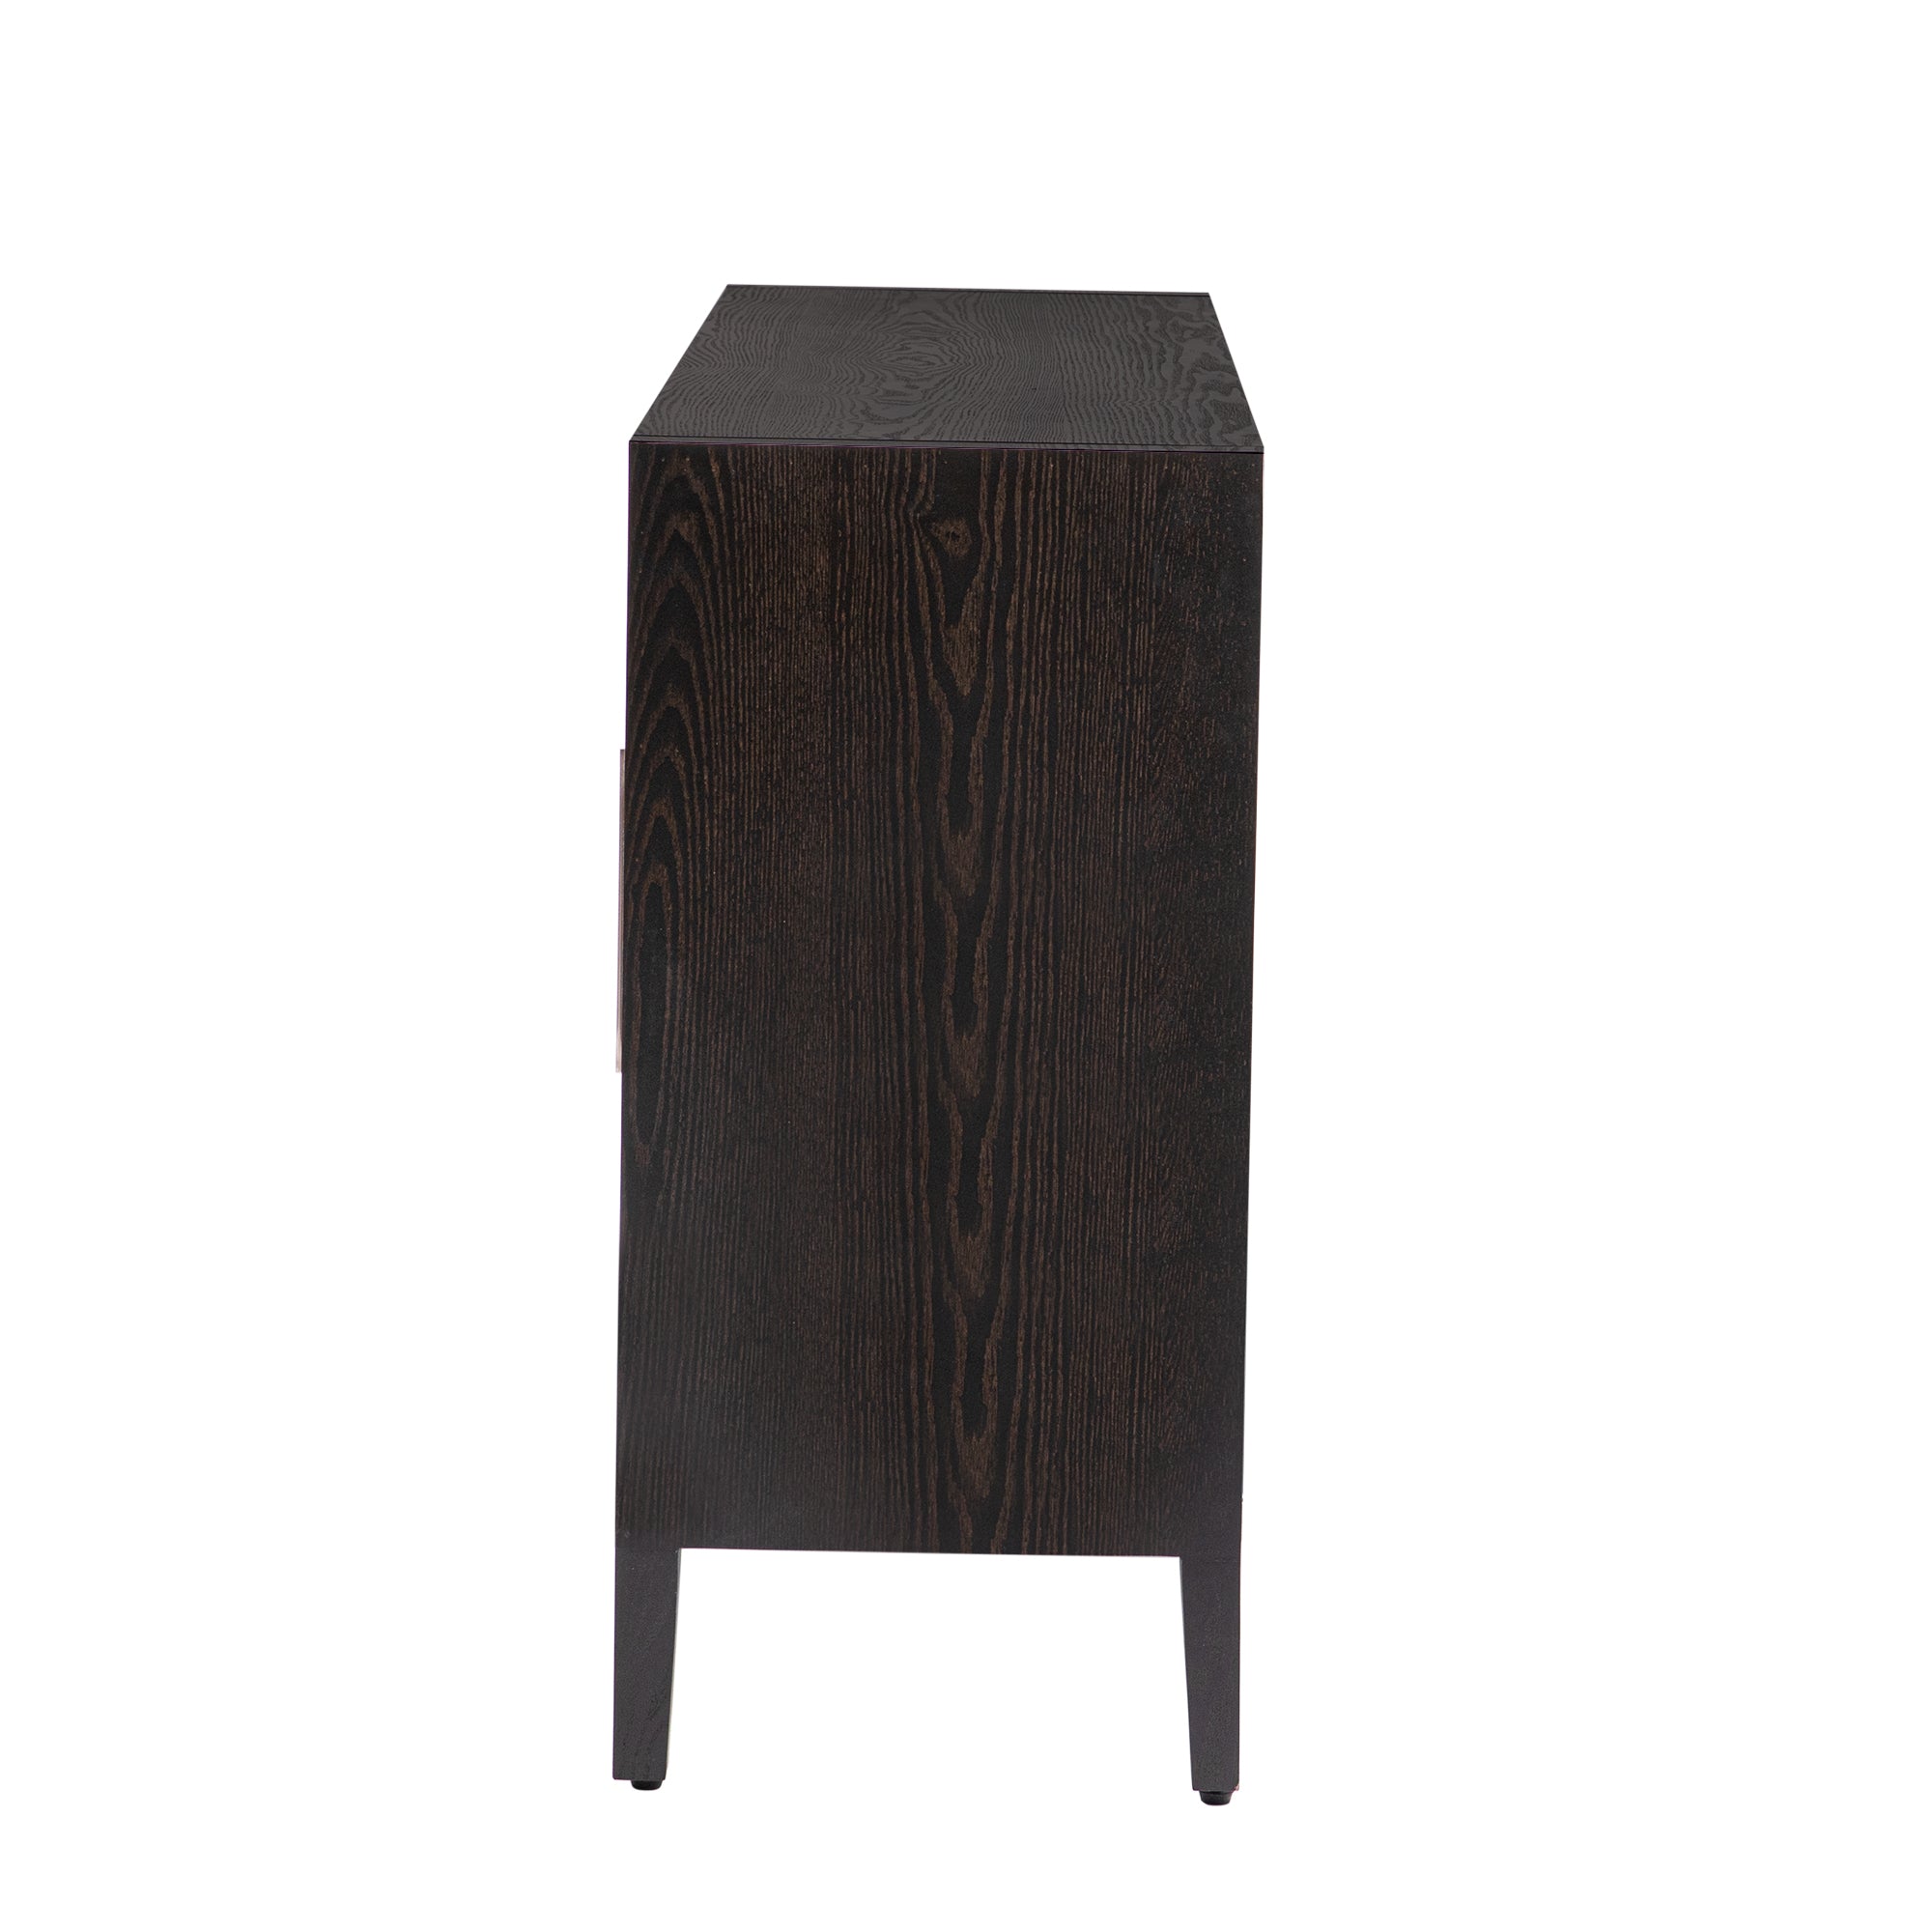 U STYLE Storage Cabinet Sideboard Wooden Cabinet with walnut-mdf